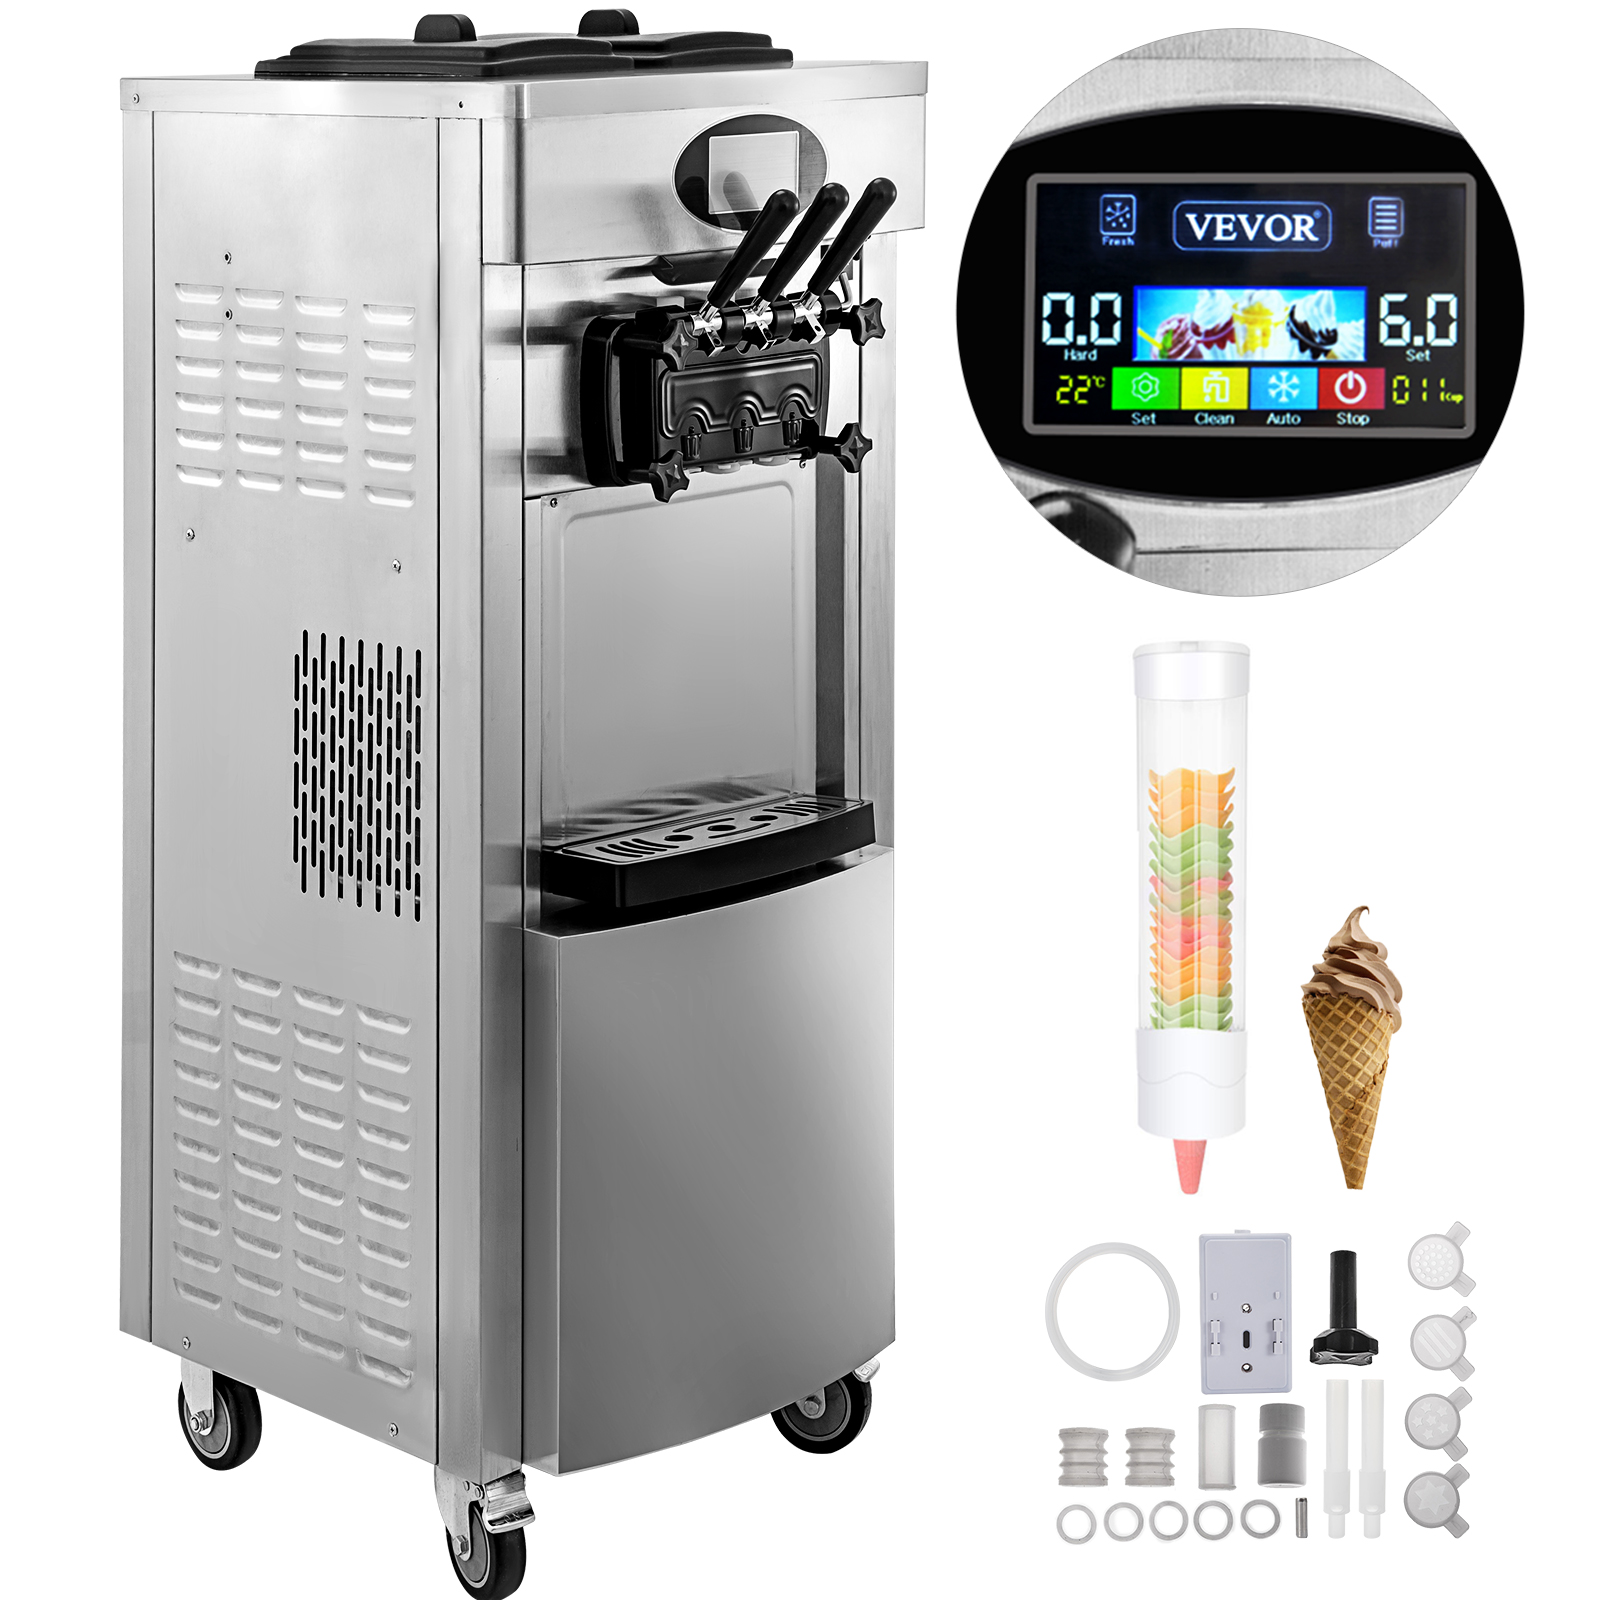 Vevor Commercial Soft Ice Cream Machine 3 Flavors Frozen Yogurt Maker